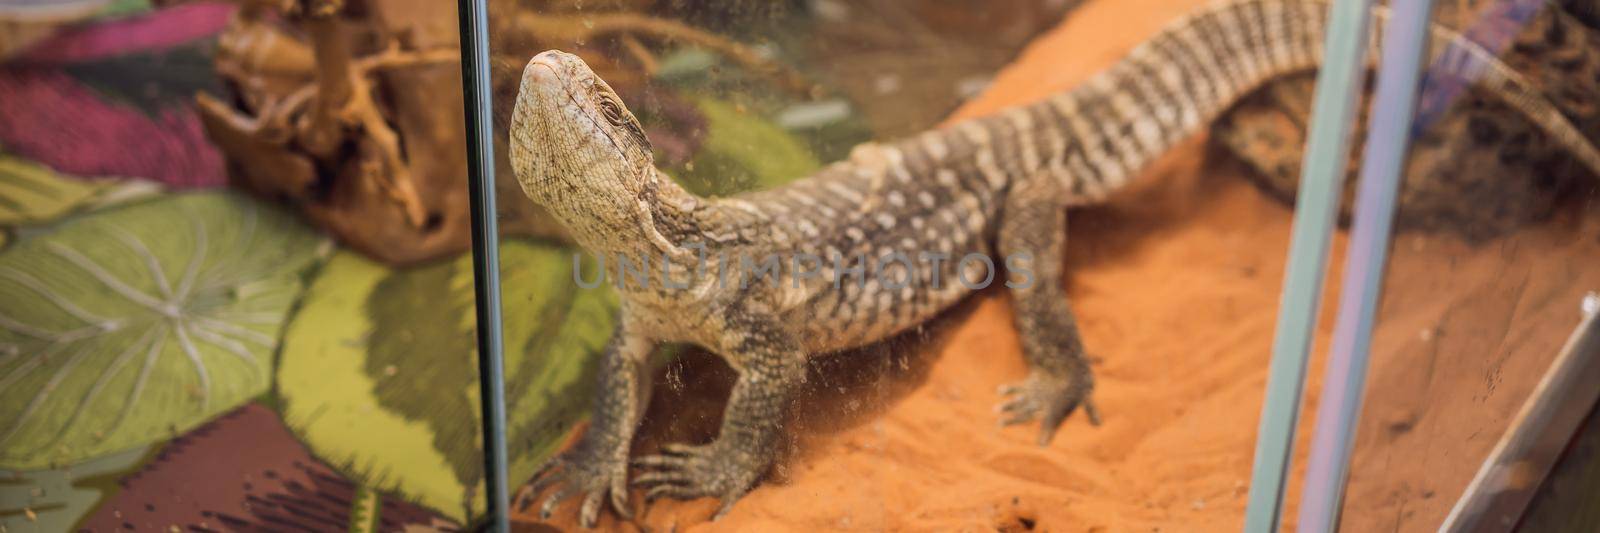 Big iguana lizard in terrarium - animal background BANNER, LONG FORMAT by galitskaya